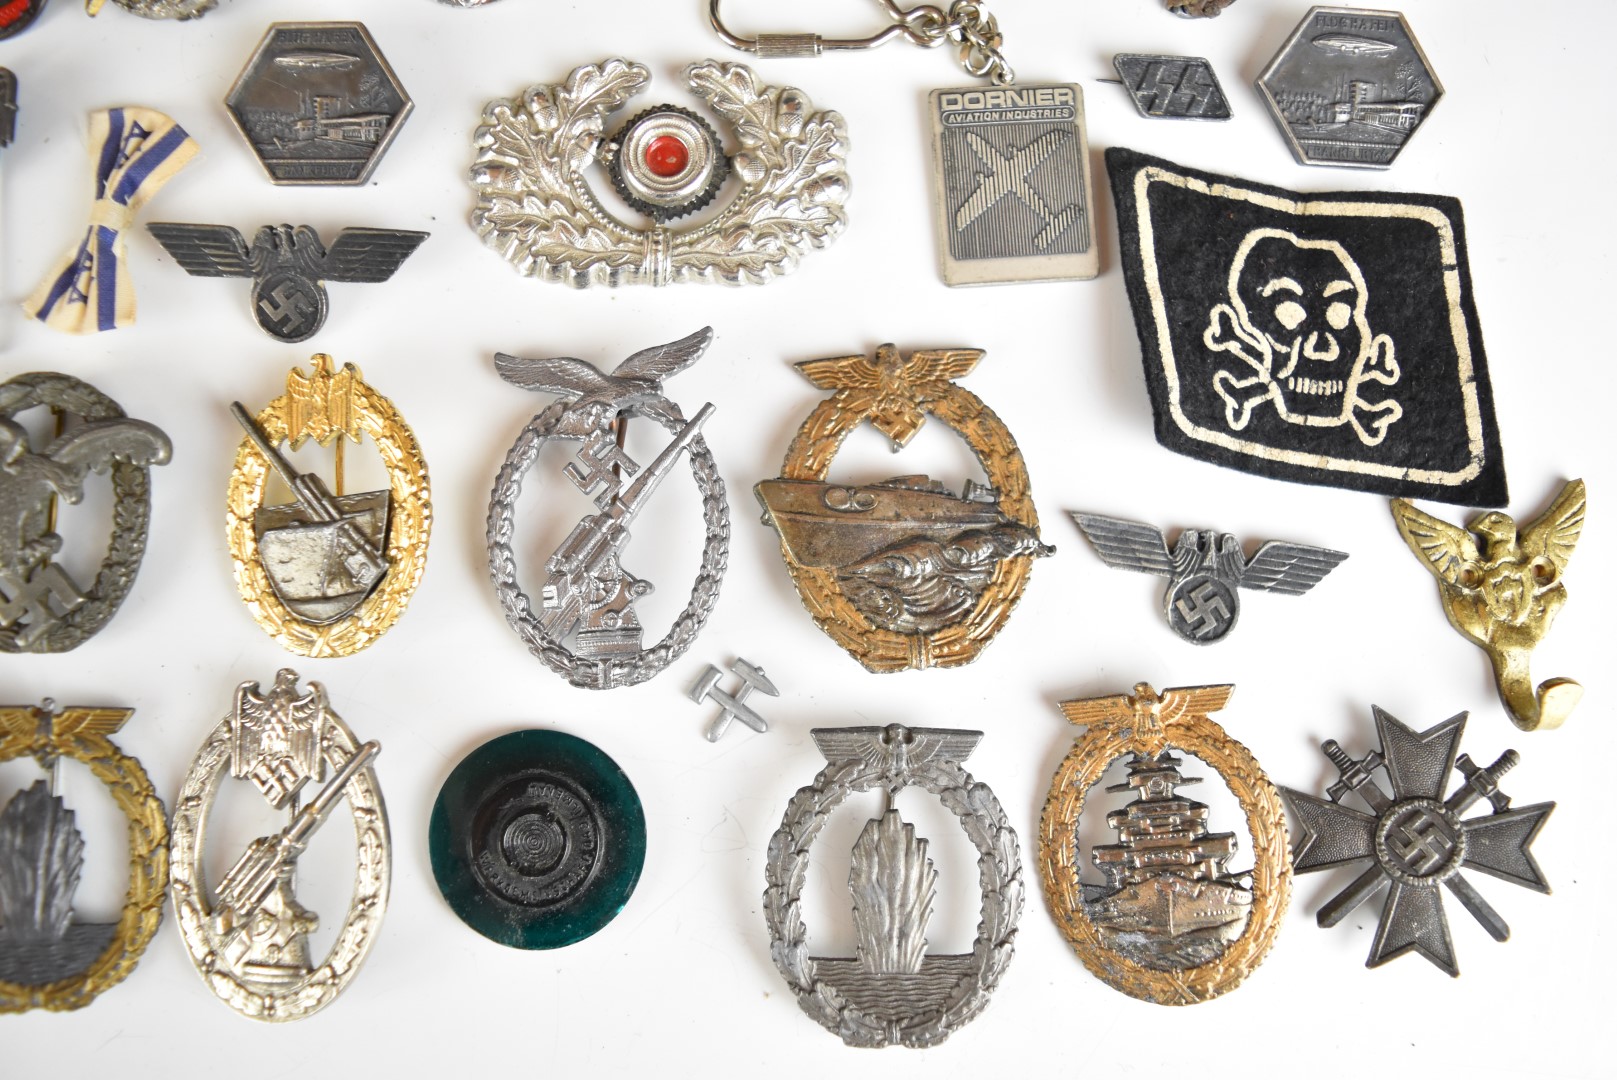 Replica German WW2 Nazi Third Reich badges, insignia and medals including High Seas Fleet, Artillery - Image 13 of 16